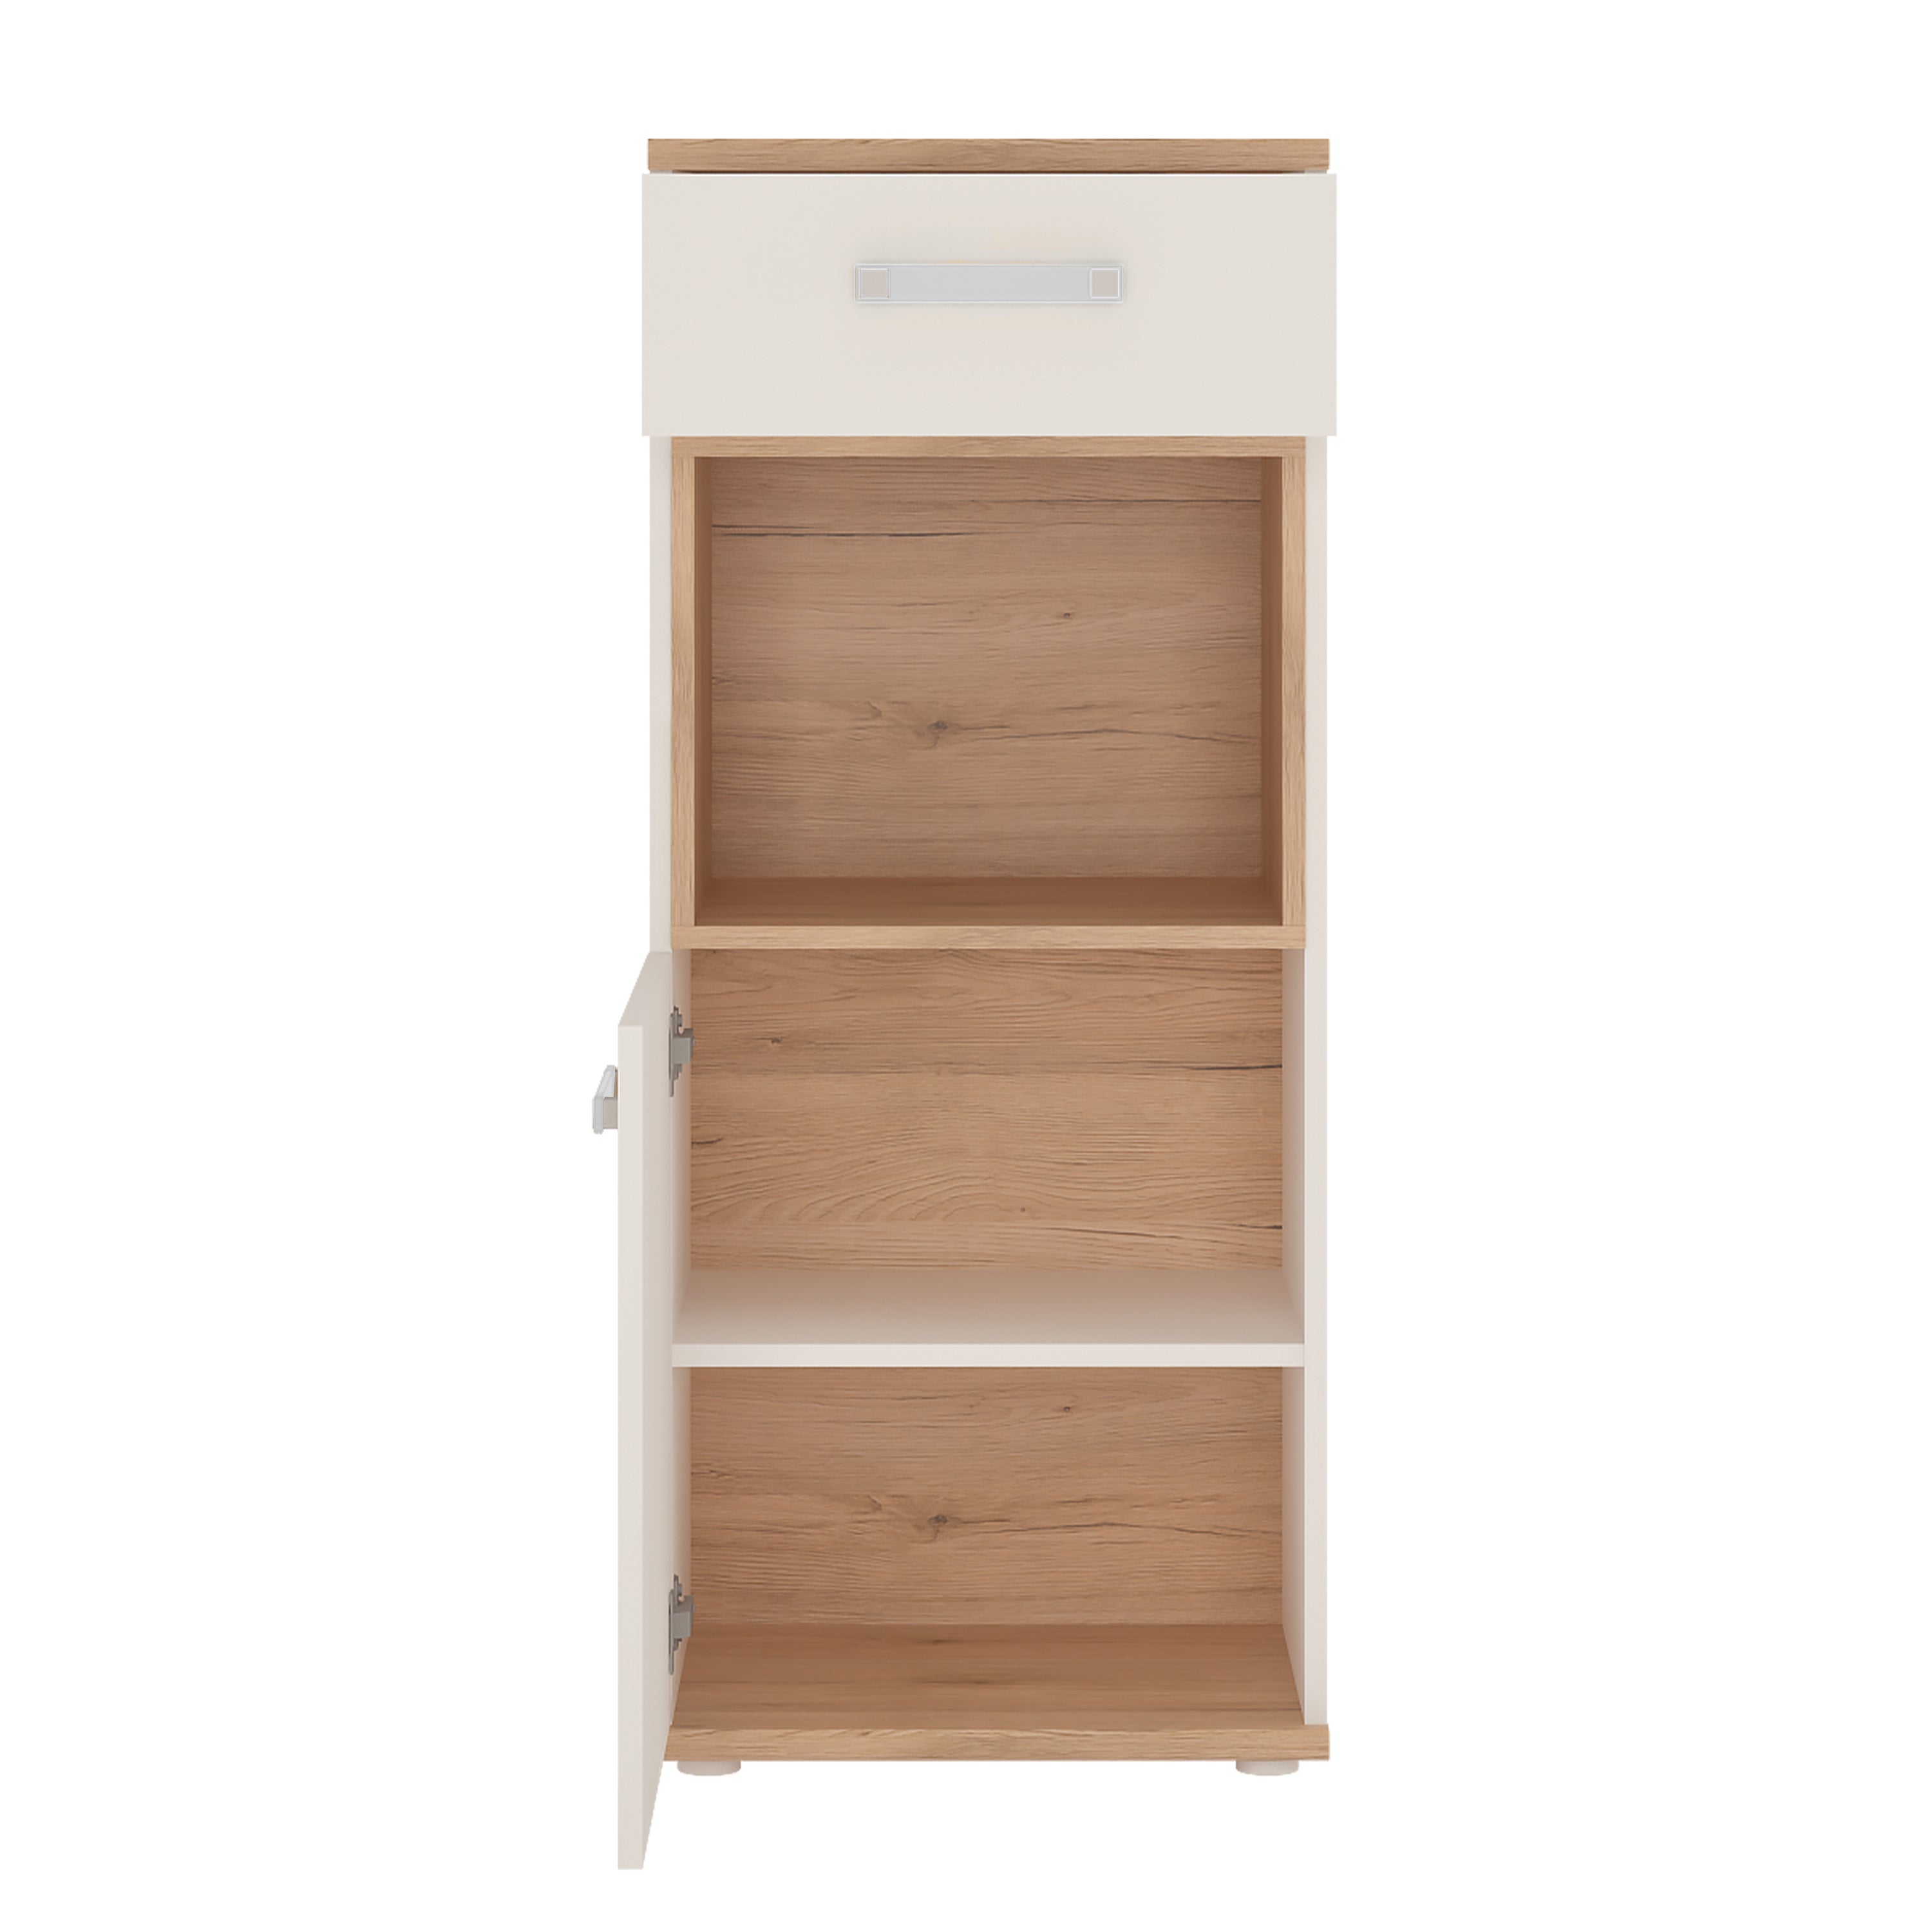 4Kids 1 Door 1 Drawer Narrow Cabinet in Light Oak and white High Gloss (opalino handles)